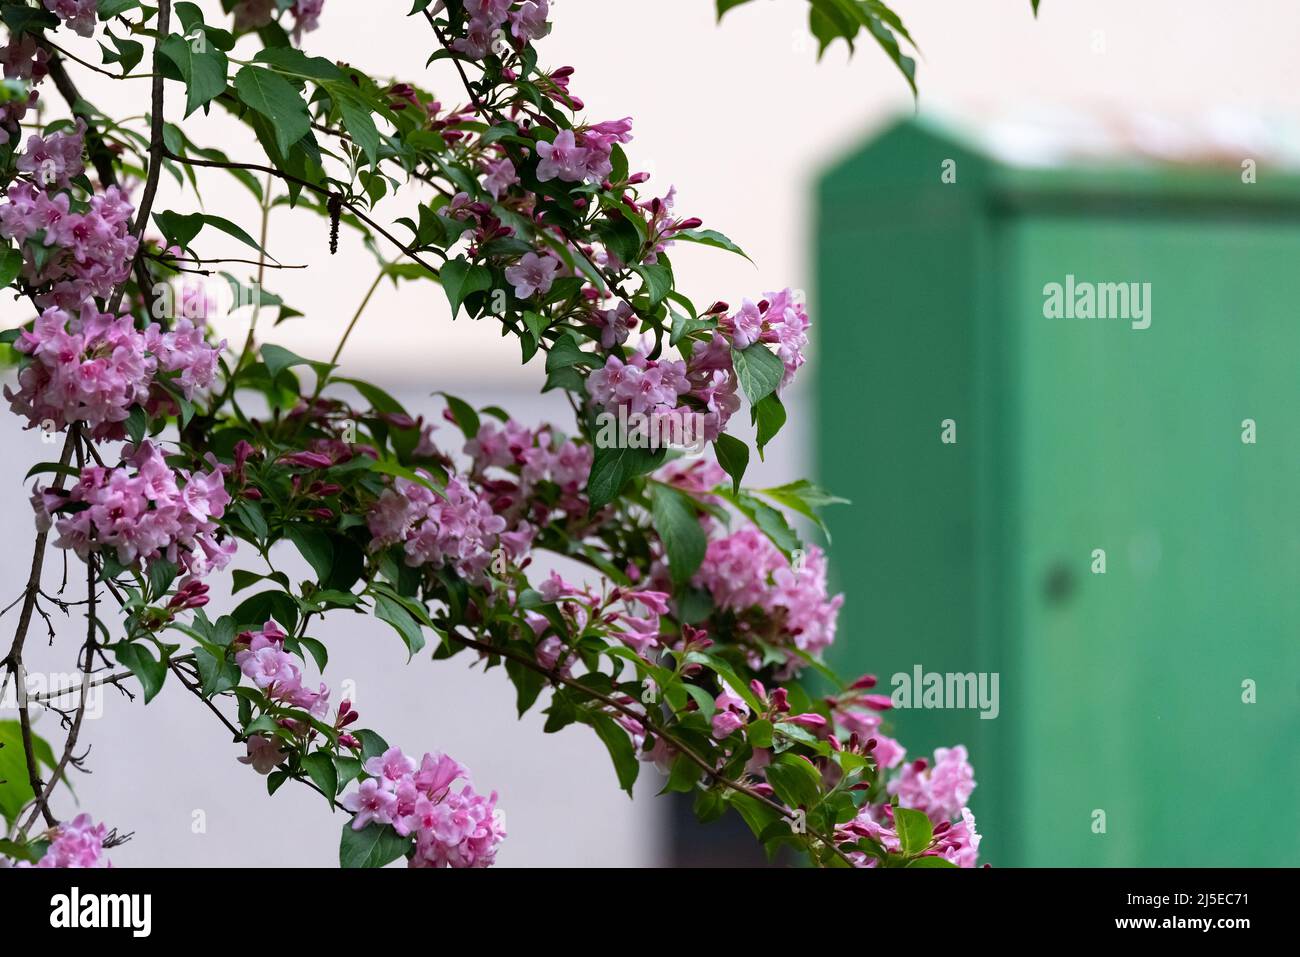 A wonderful shrub, flowering ornamental shrub with pink flowers. Stock Photo